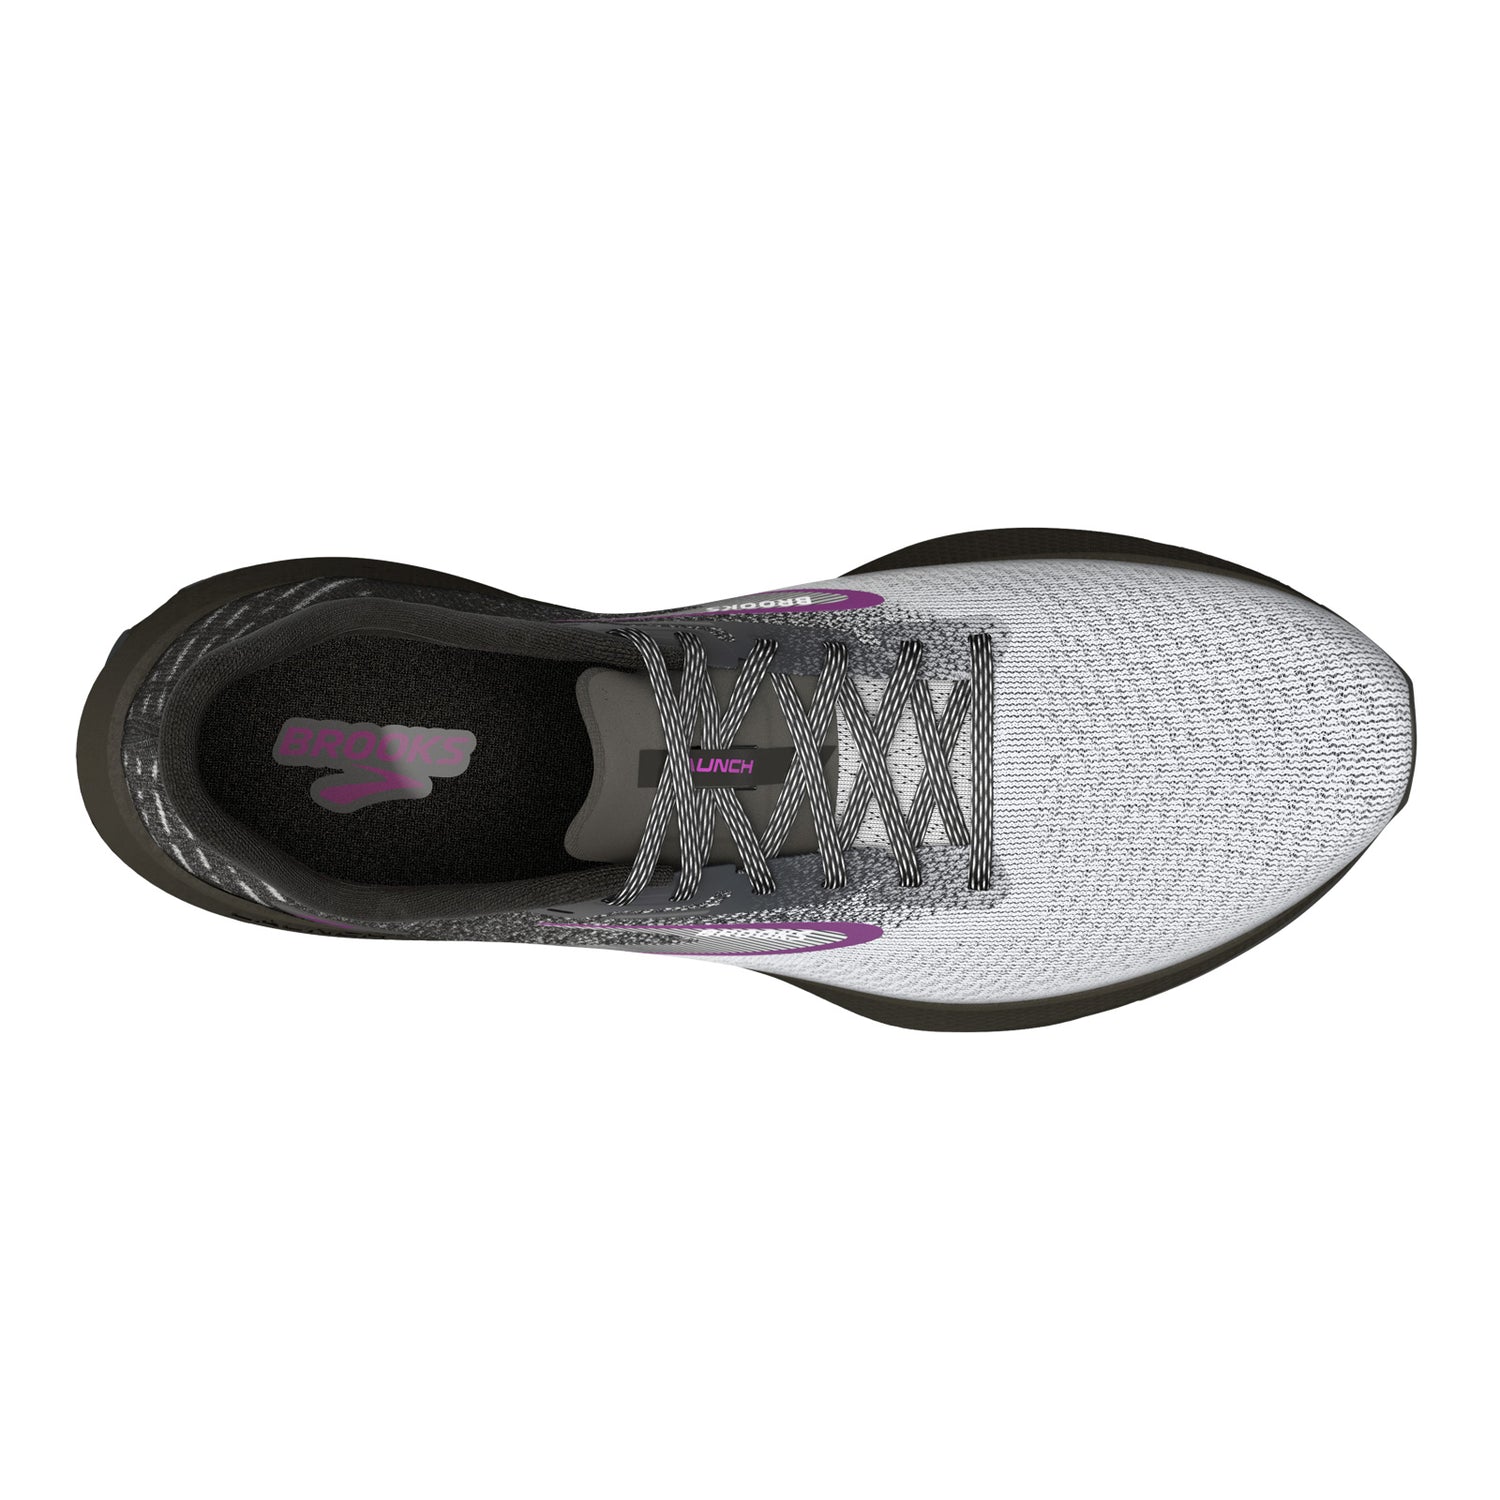 Peltz Shoes  Women's Brooks Launch 10 Running Shoe - Wide Width Black/White/Violet 120398 1D 085